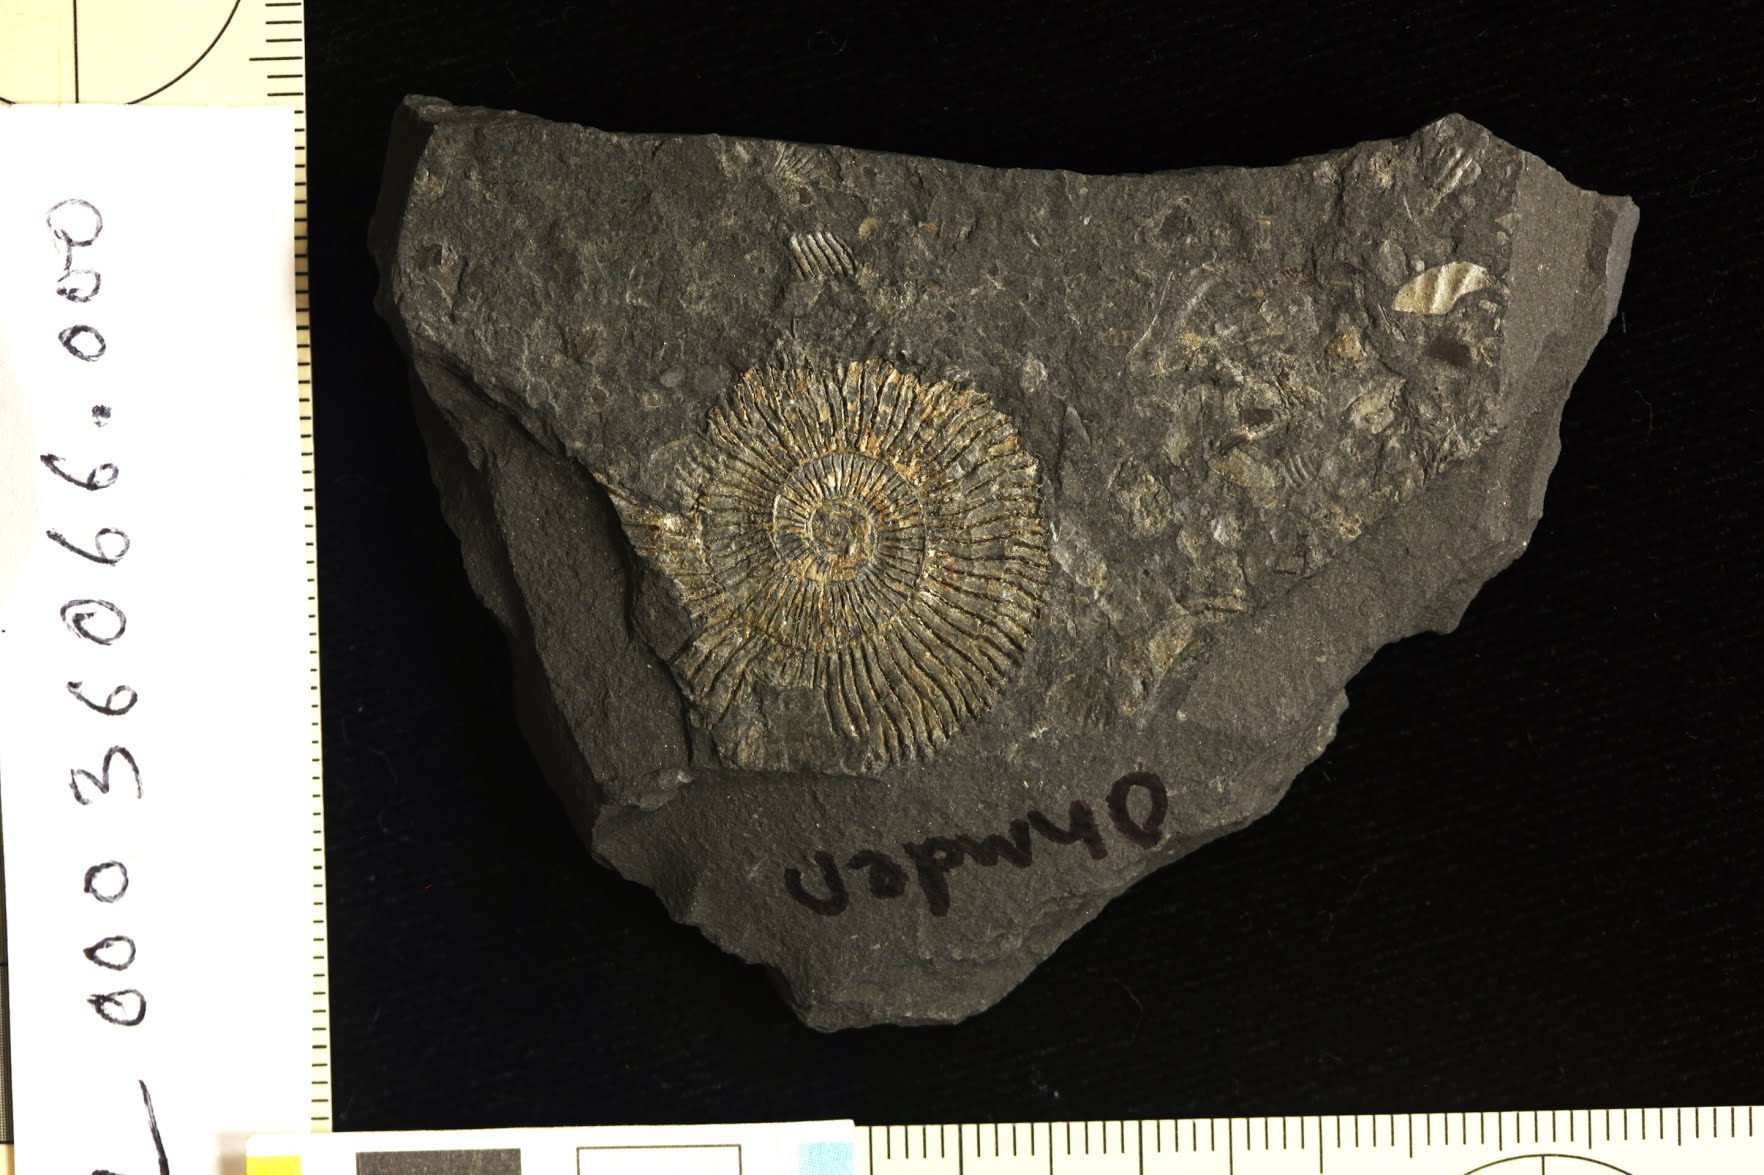 Fossile d'ammonite De la carrière d'Ohmden, lagerstatte de schiste de Posidonia.